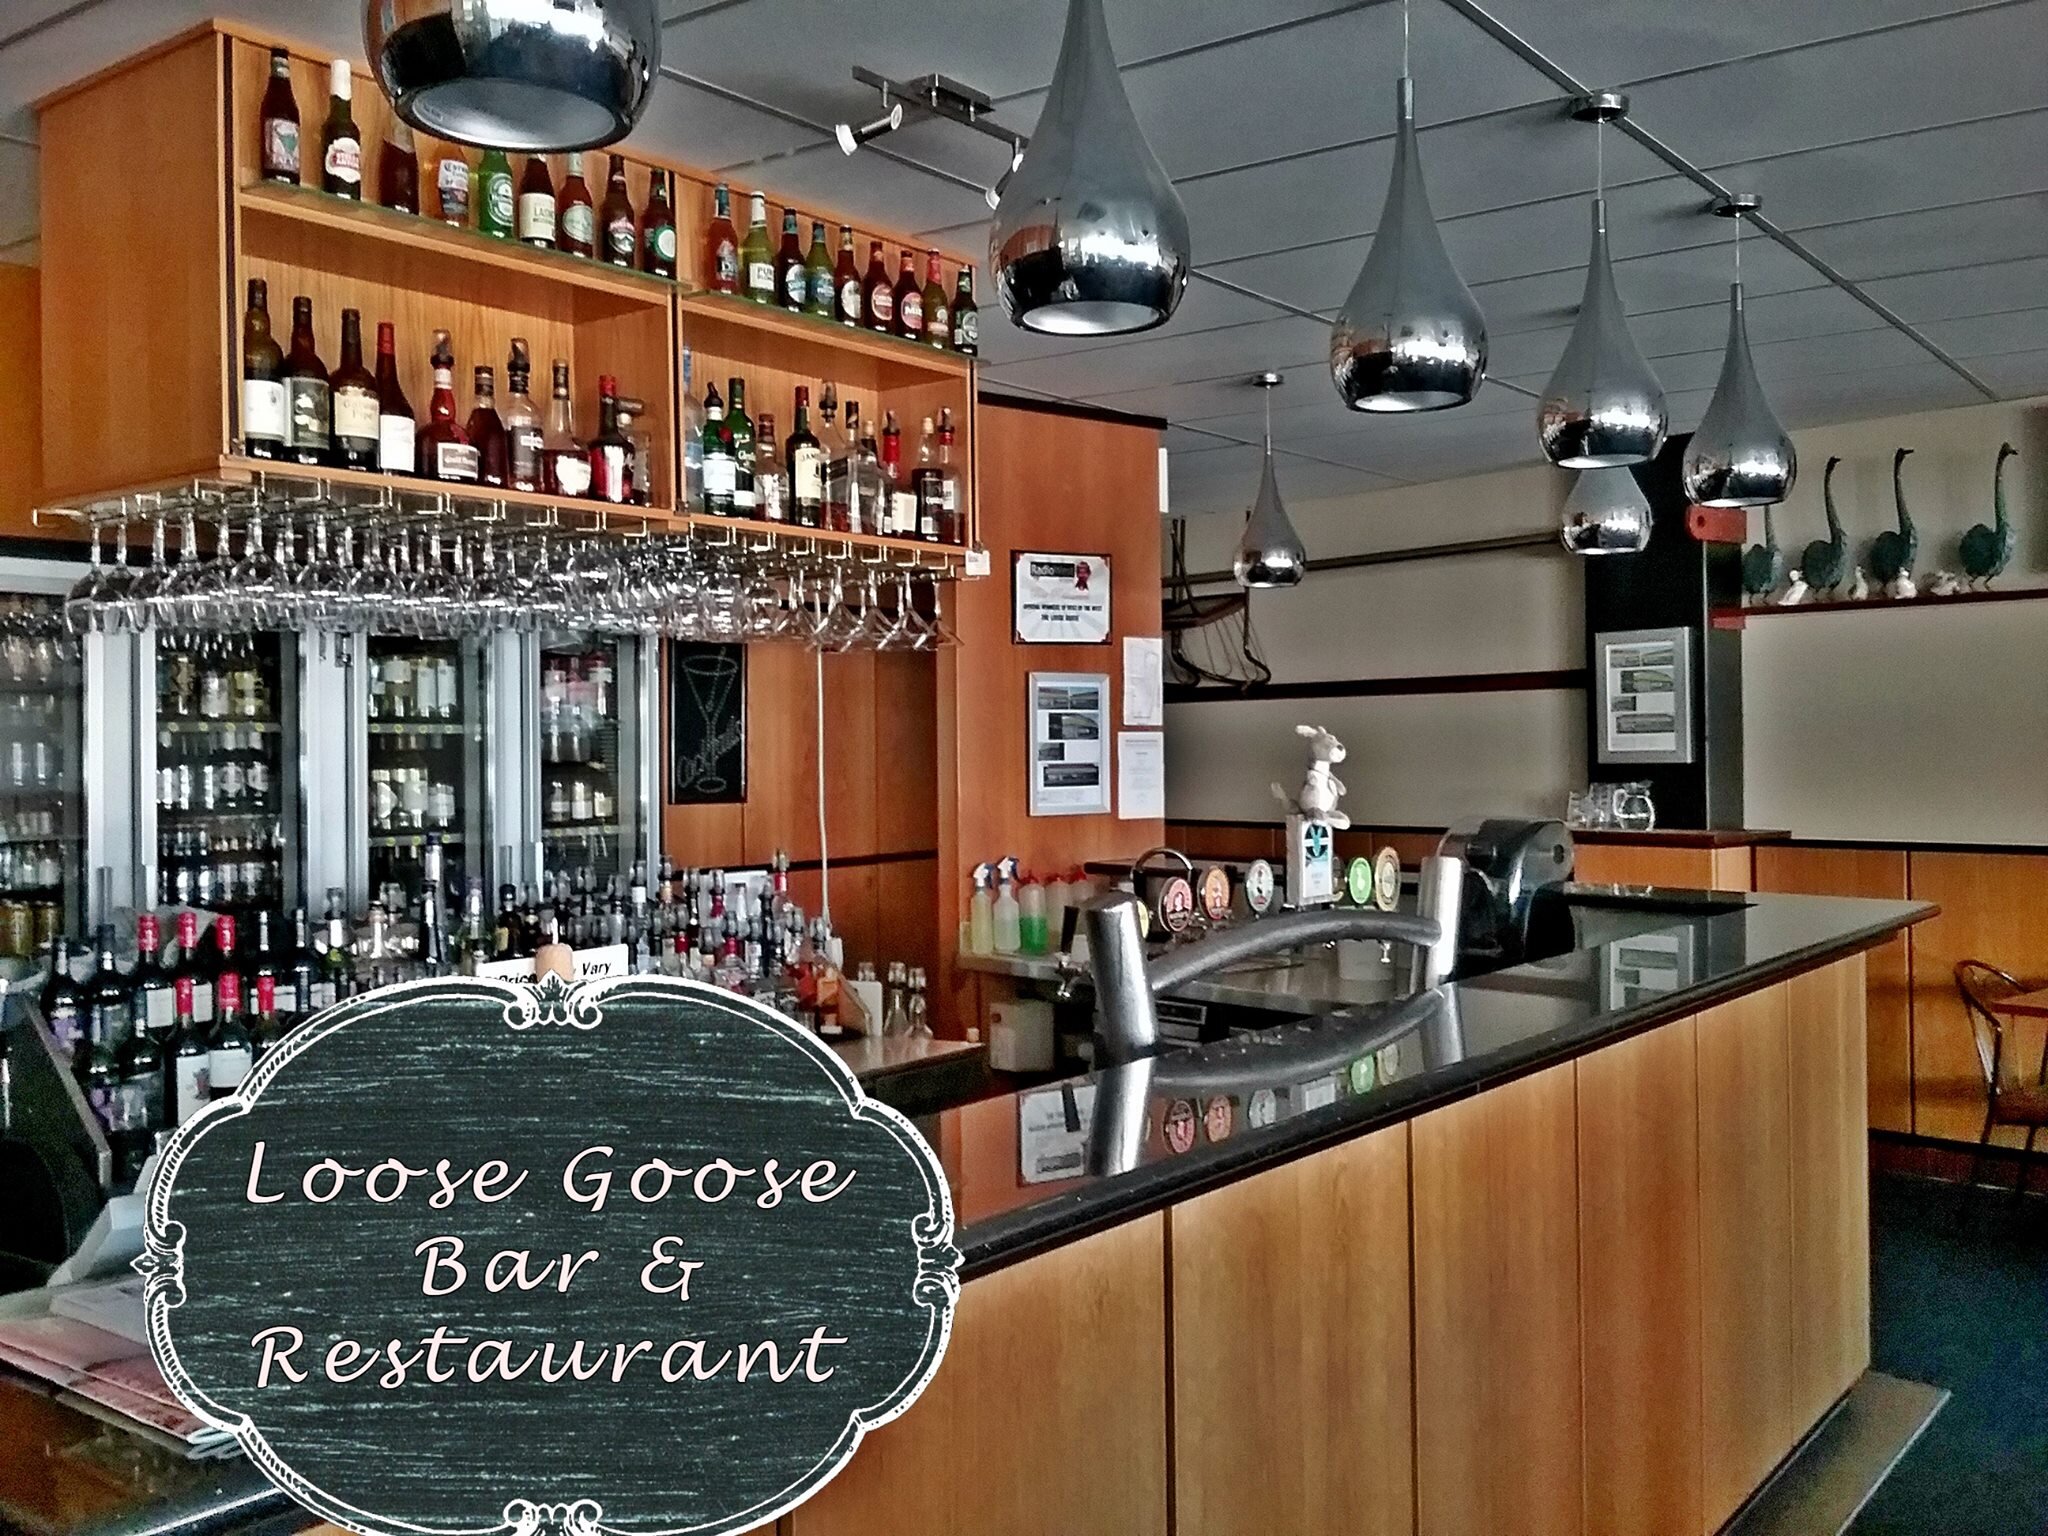  Loose Goose Bar and Restaurant - Esperance, Australia